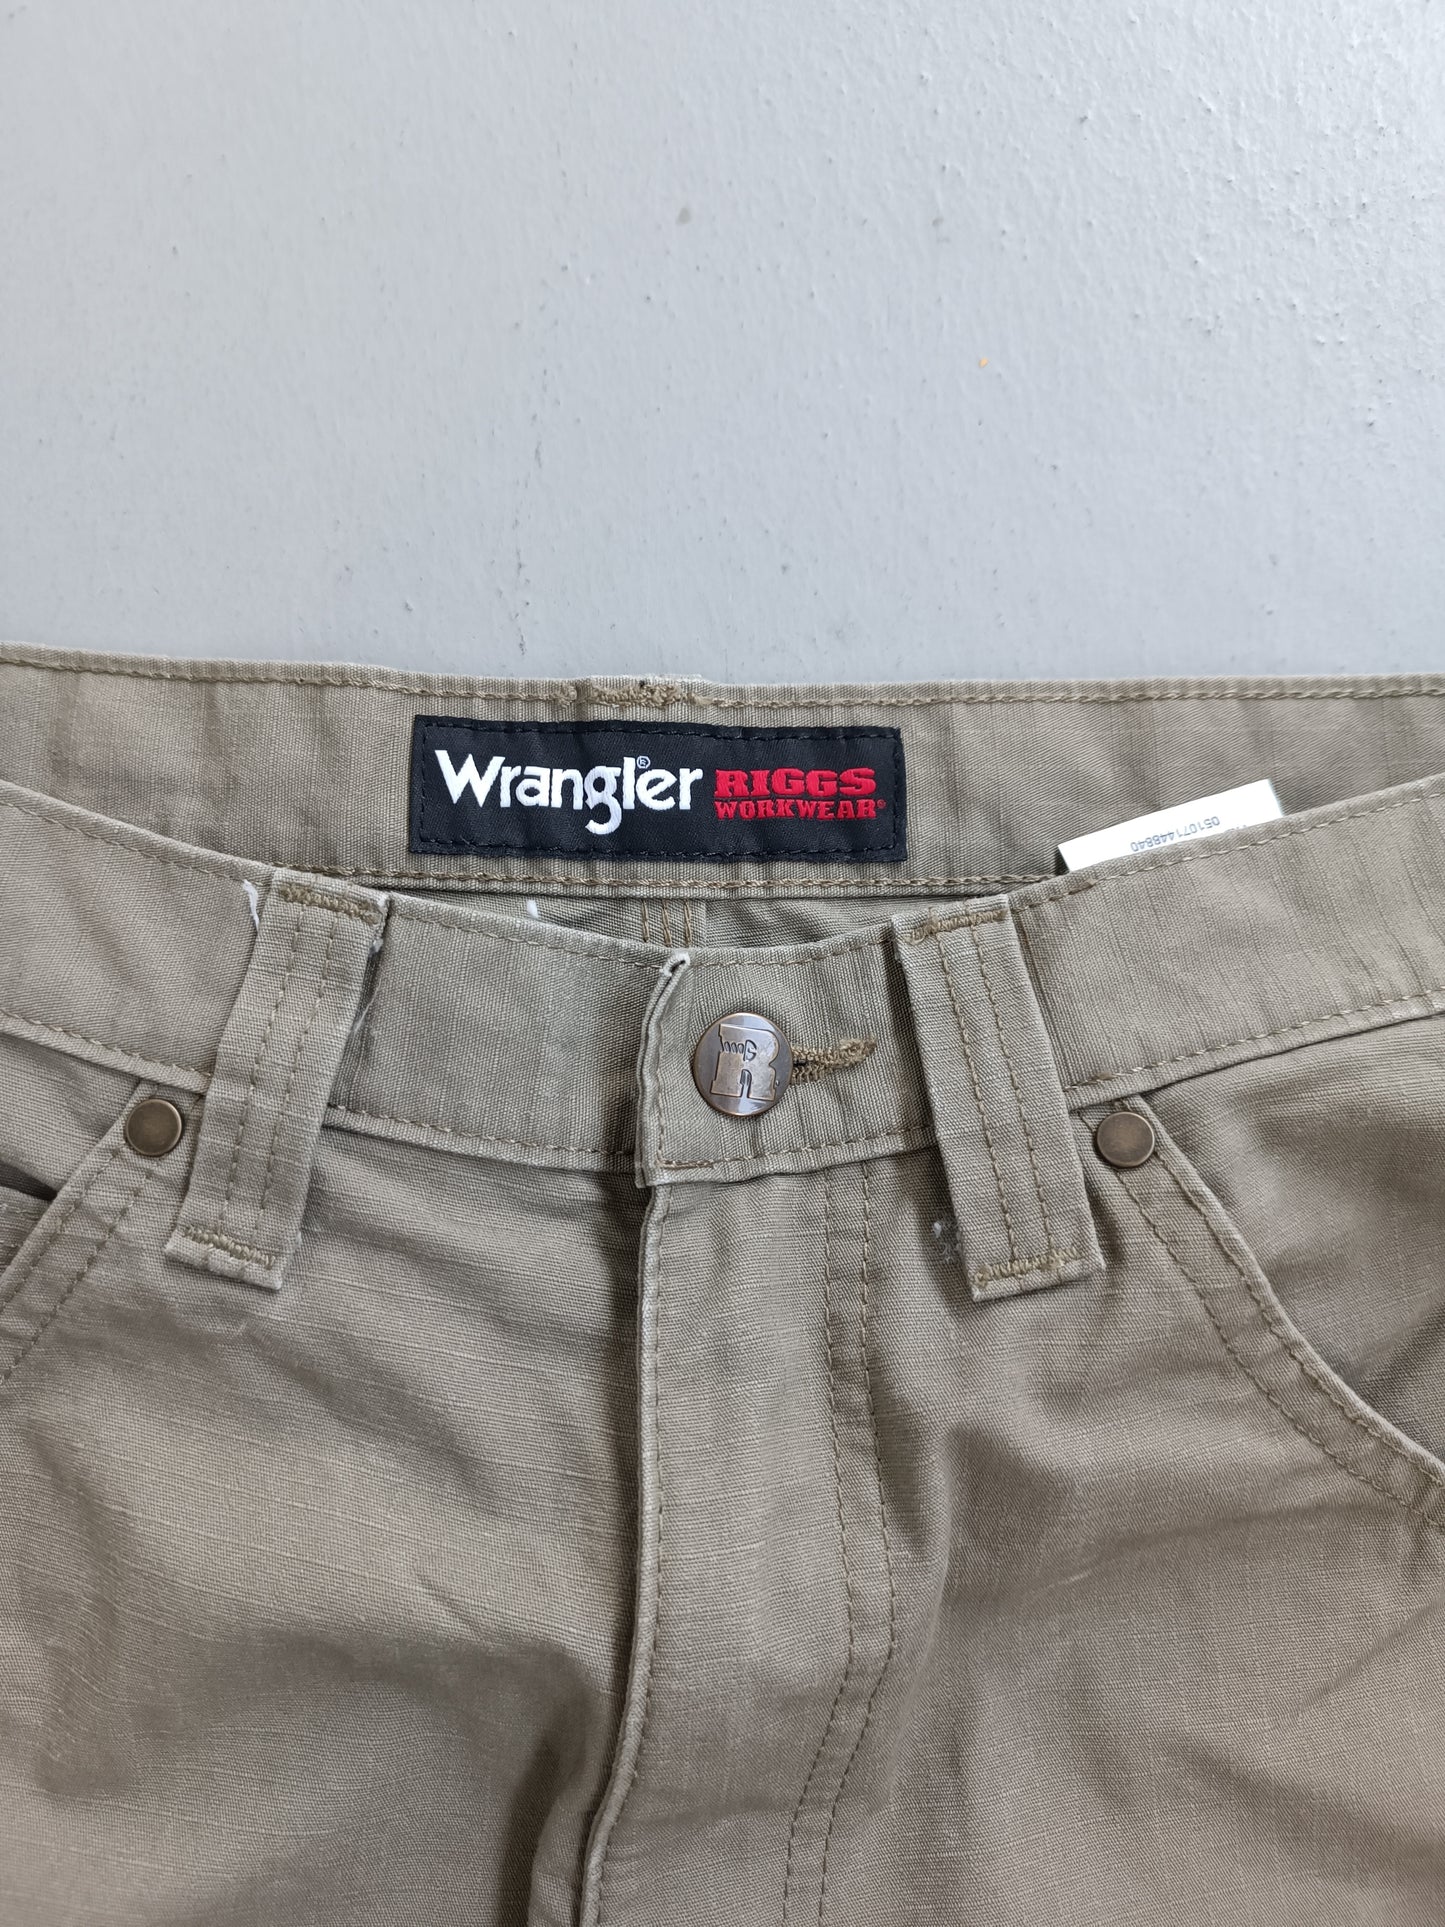 Wrangler Ripstop Cargo Pants - W32